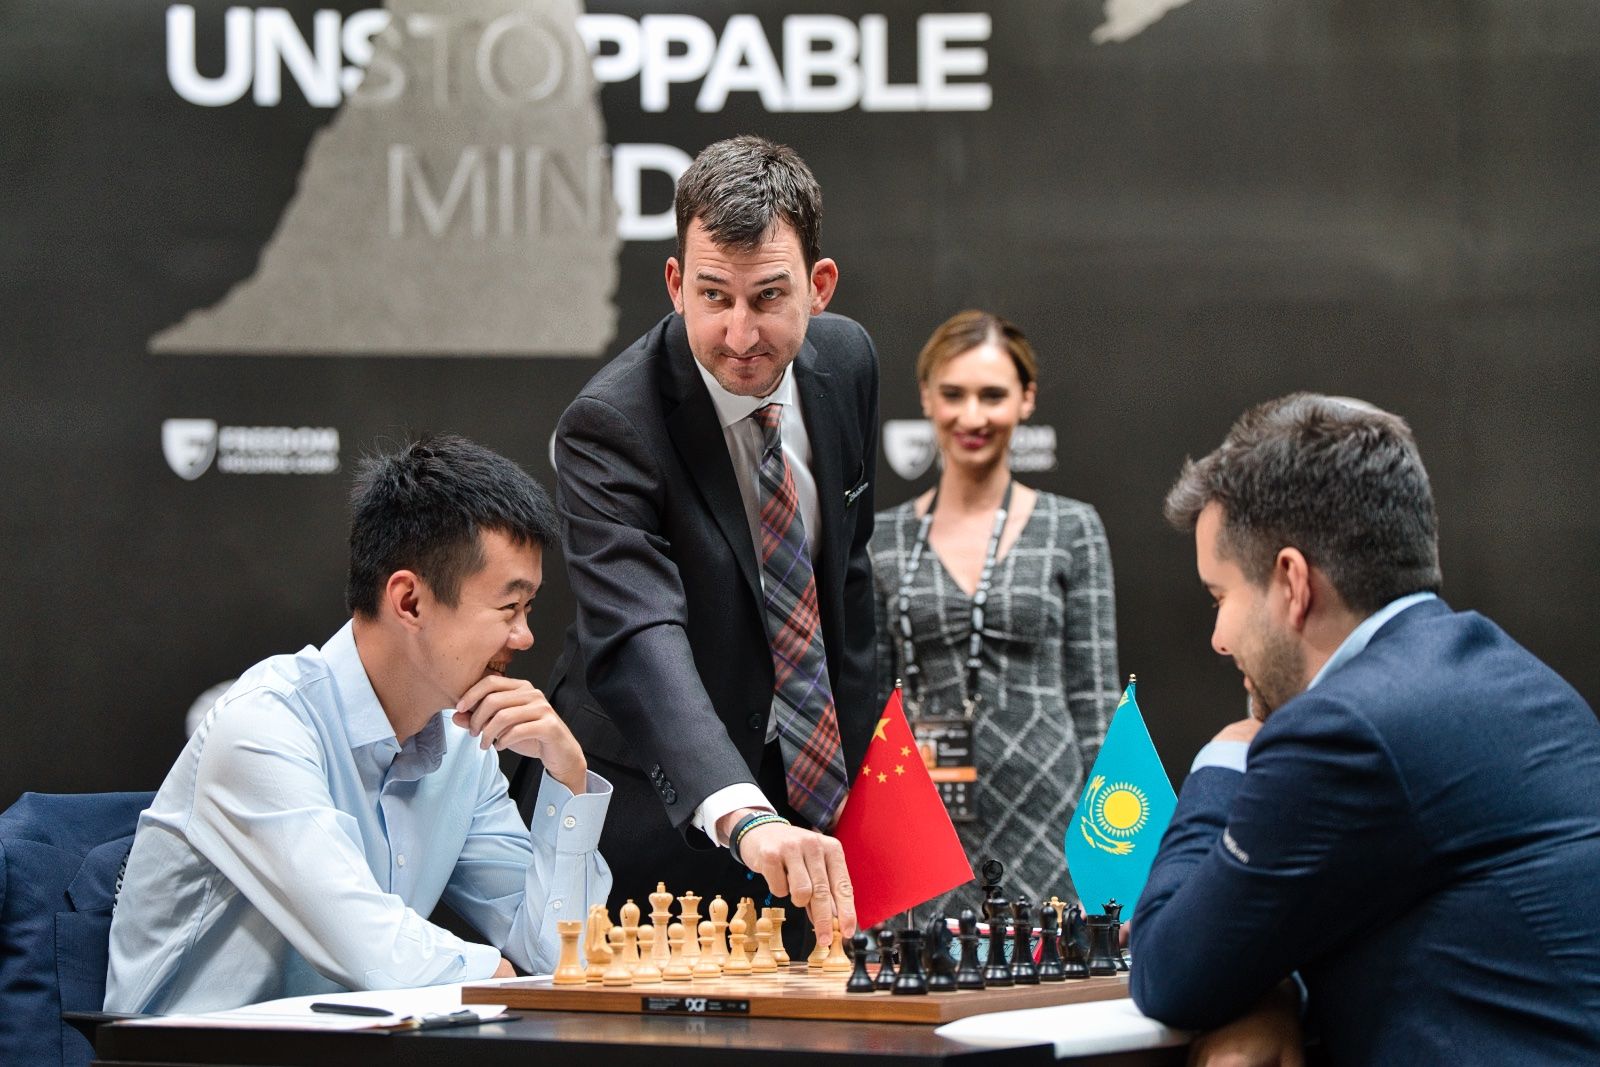 FIDE World Chess Championship 2023 / Game 4 #benkochess #dingliren #ia